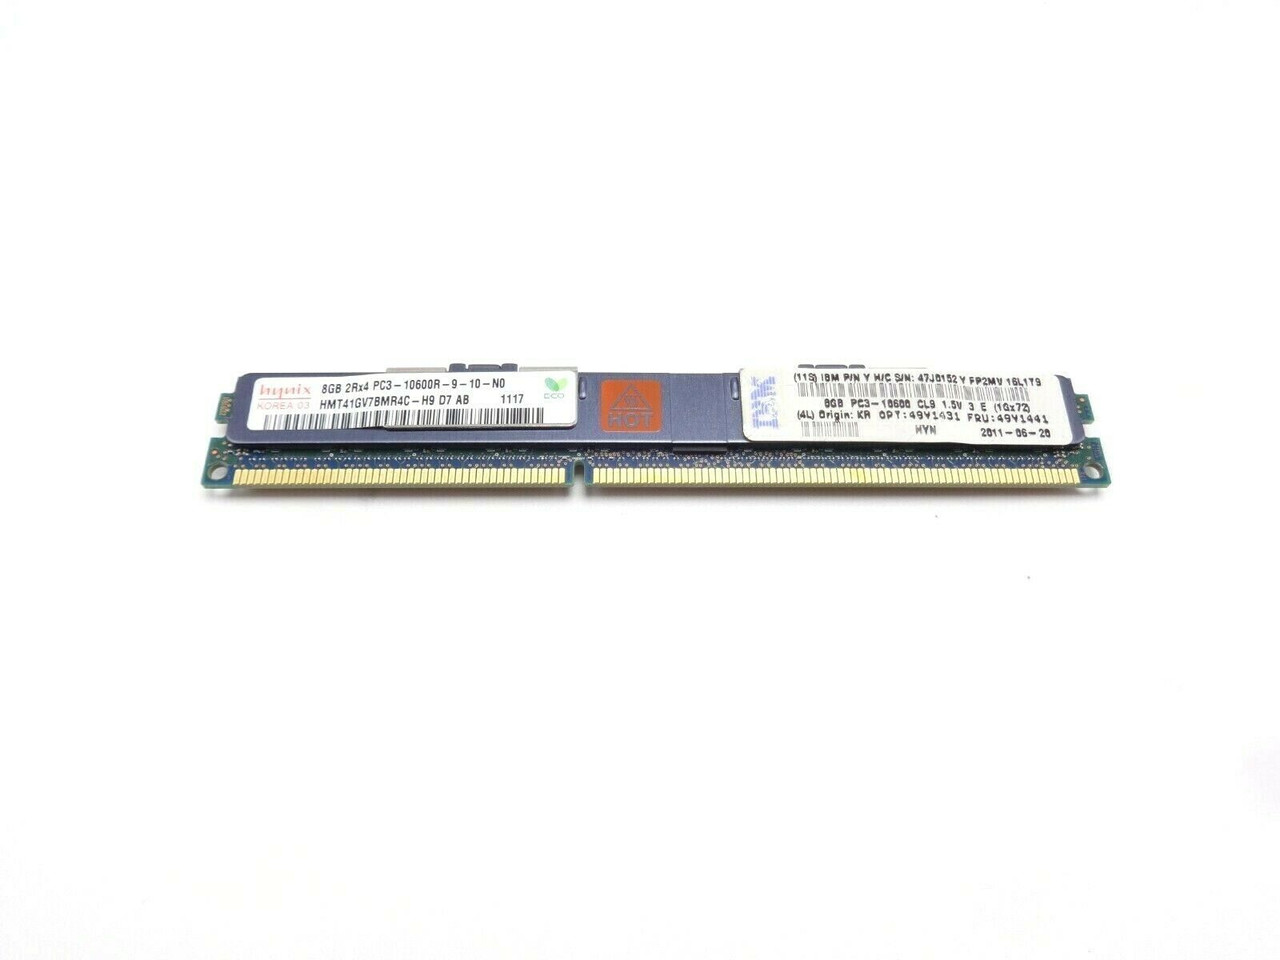 Hynix HMT41GV7BMR4C-H9 8GB PC3 10600R 2Rx4 Server Memory